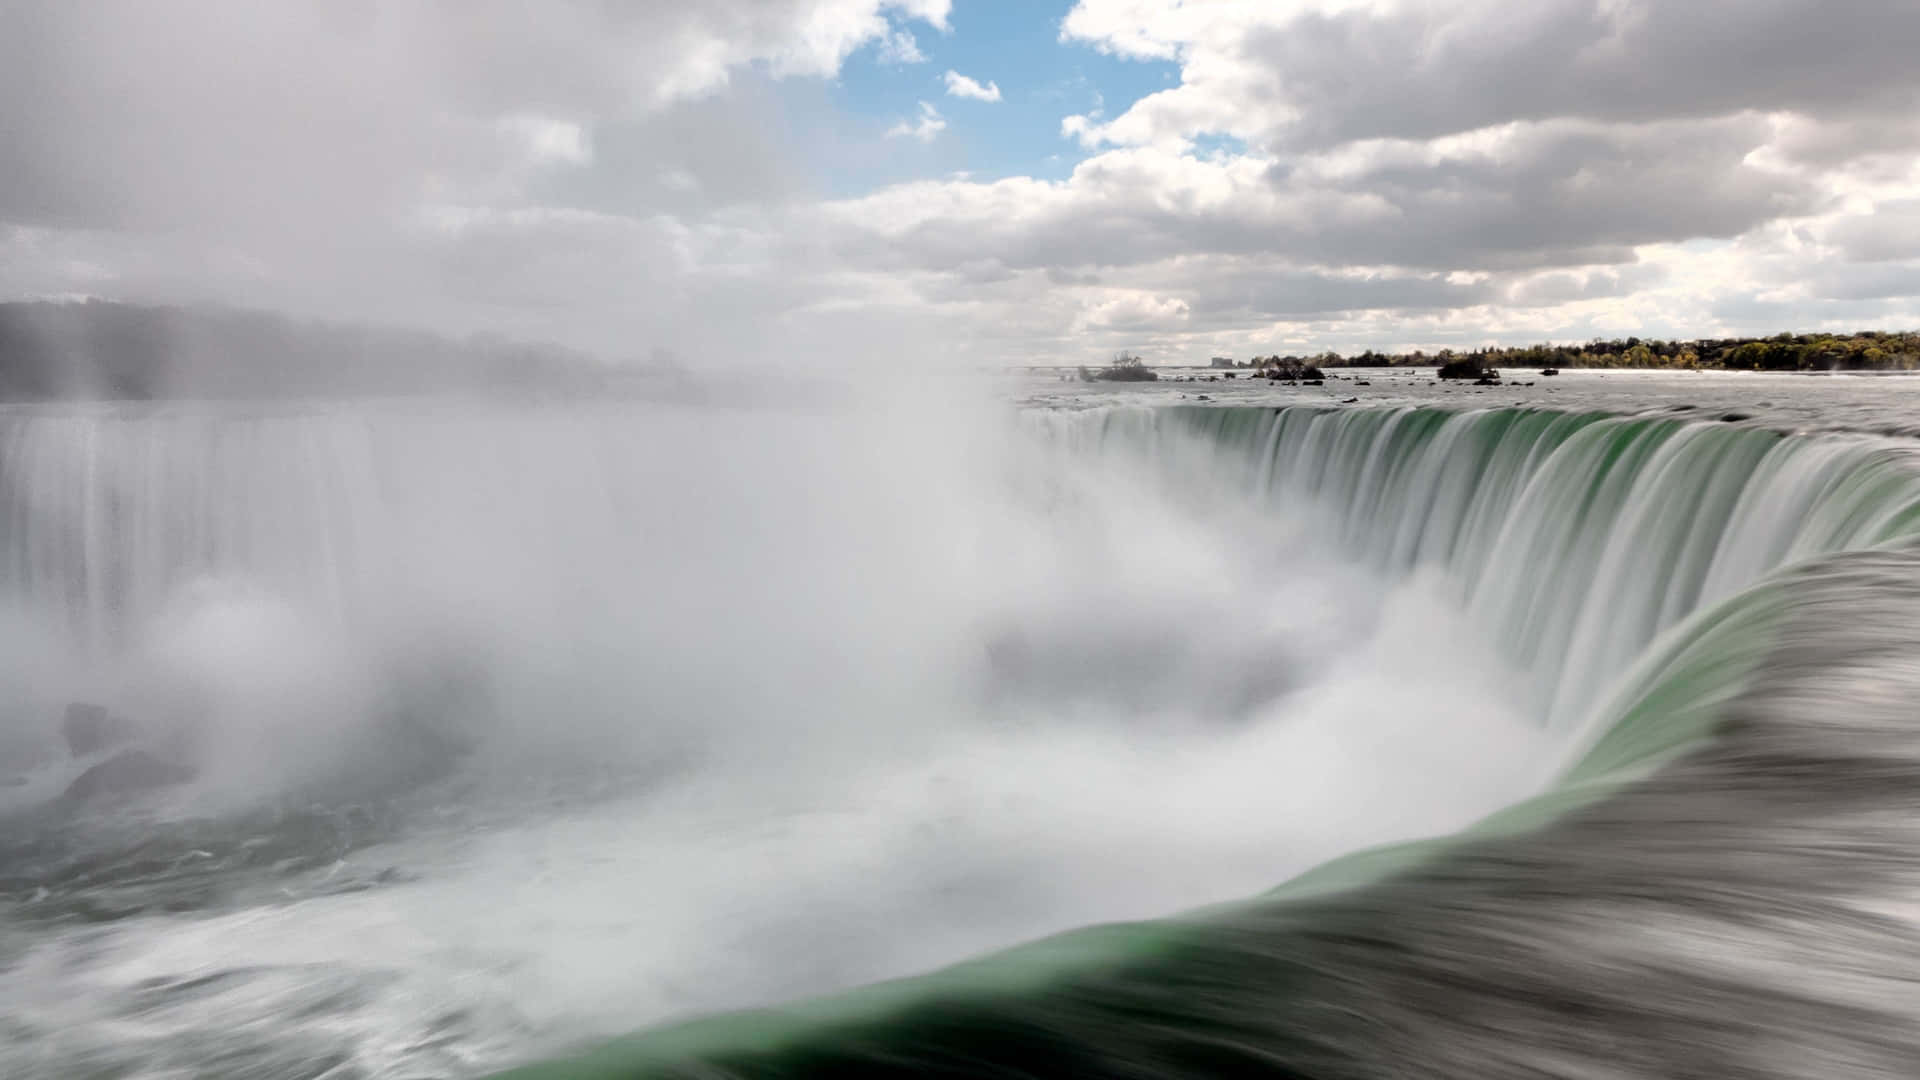 "Breathtaking views of Niagara Falls from 720p vantage point"